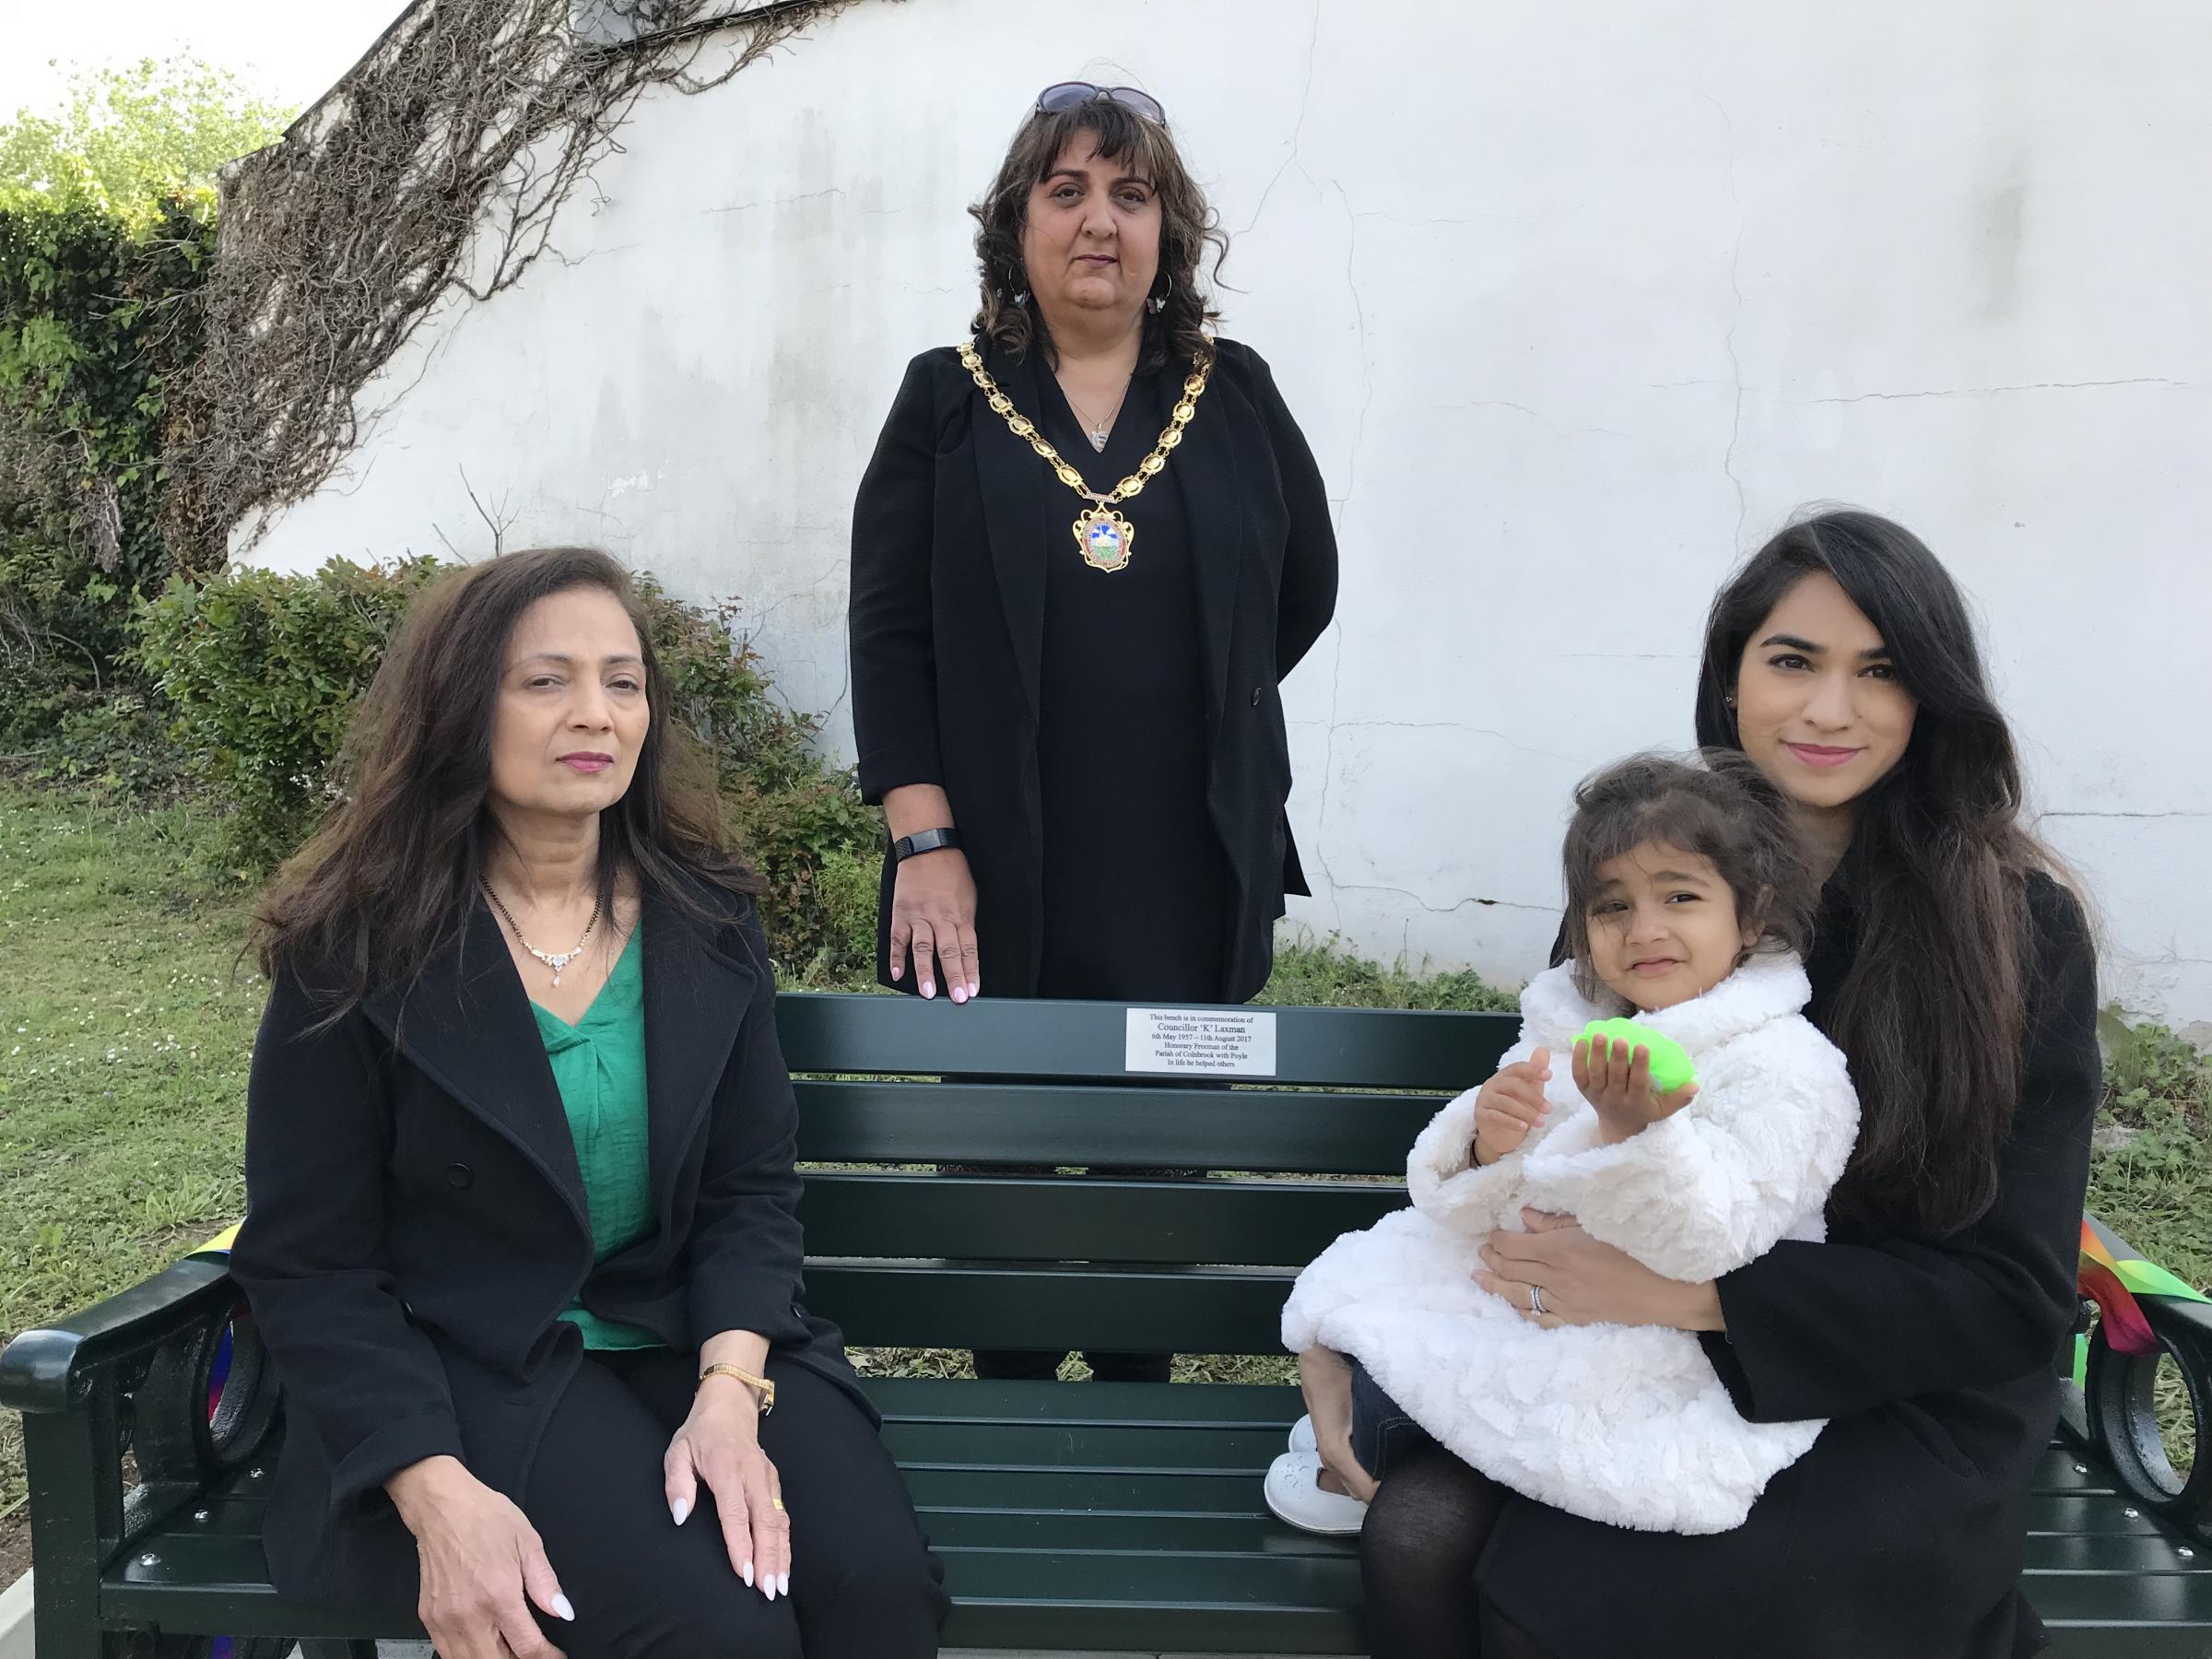 Village bench unveiled in loving memory of pharmacist K Slough Observer image pic